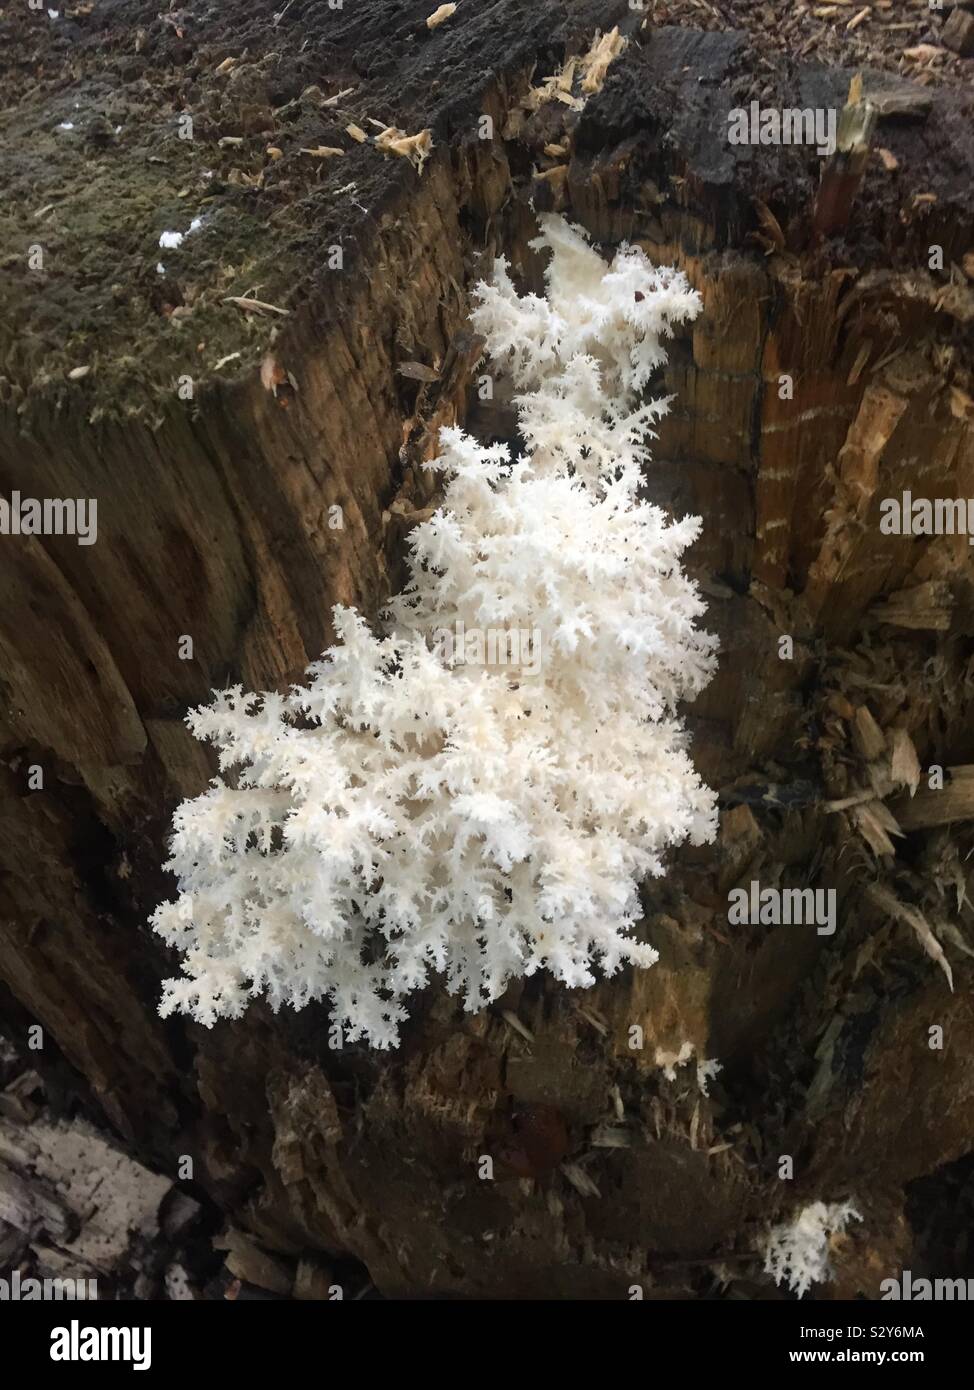 Coral fungus.  Tamaria stricta. Clavaria stricta. Stock Photo